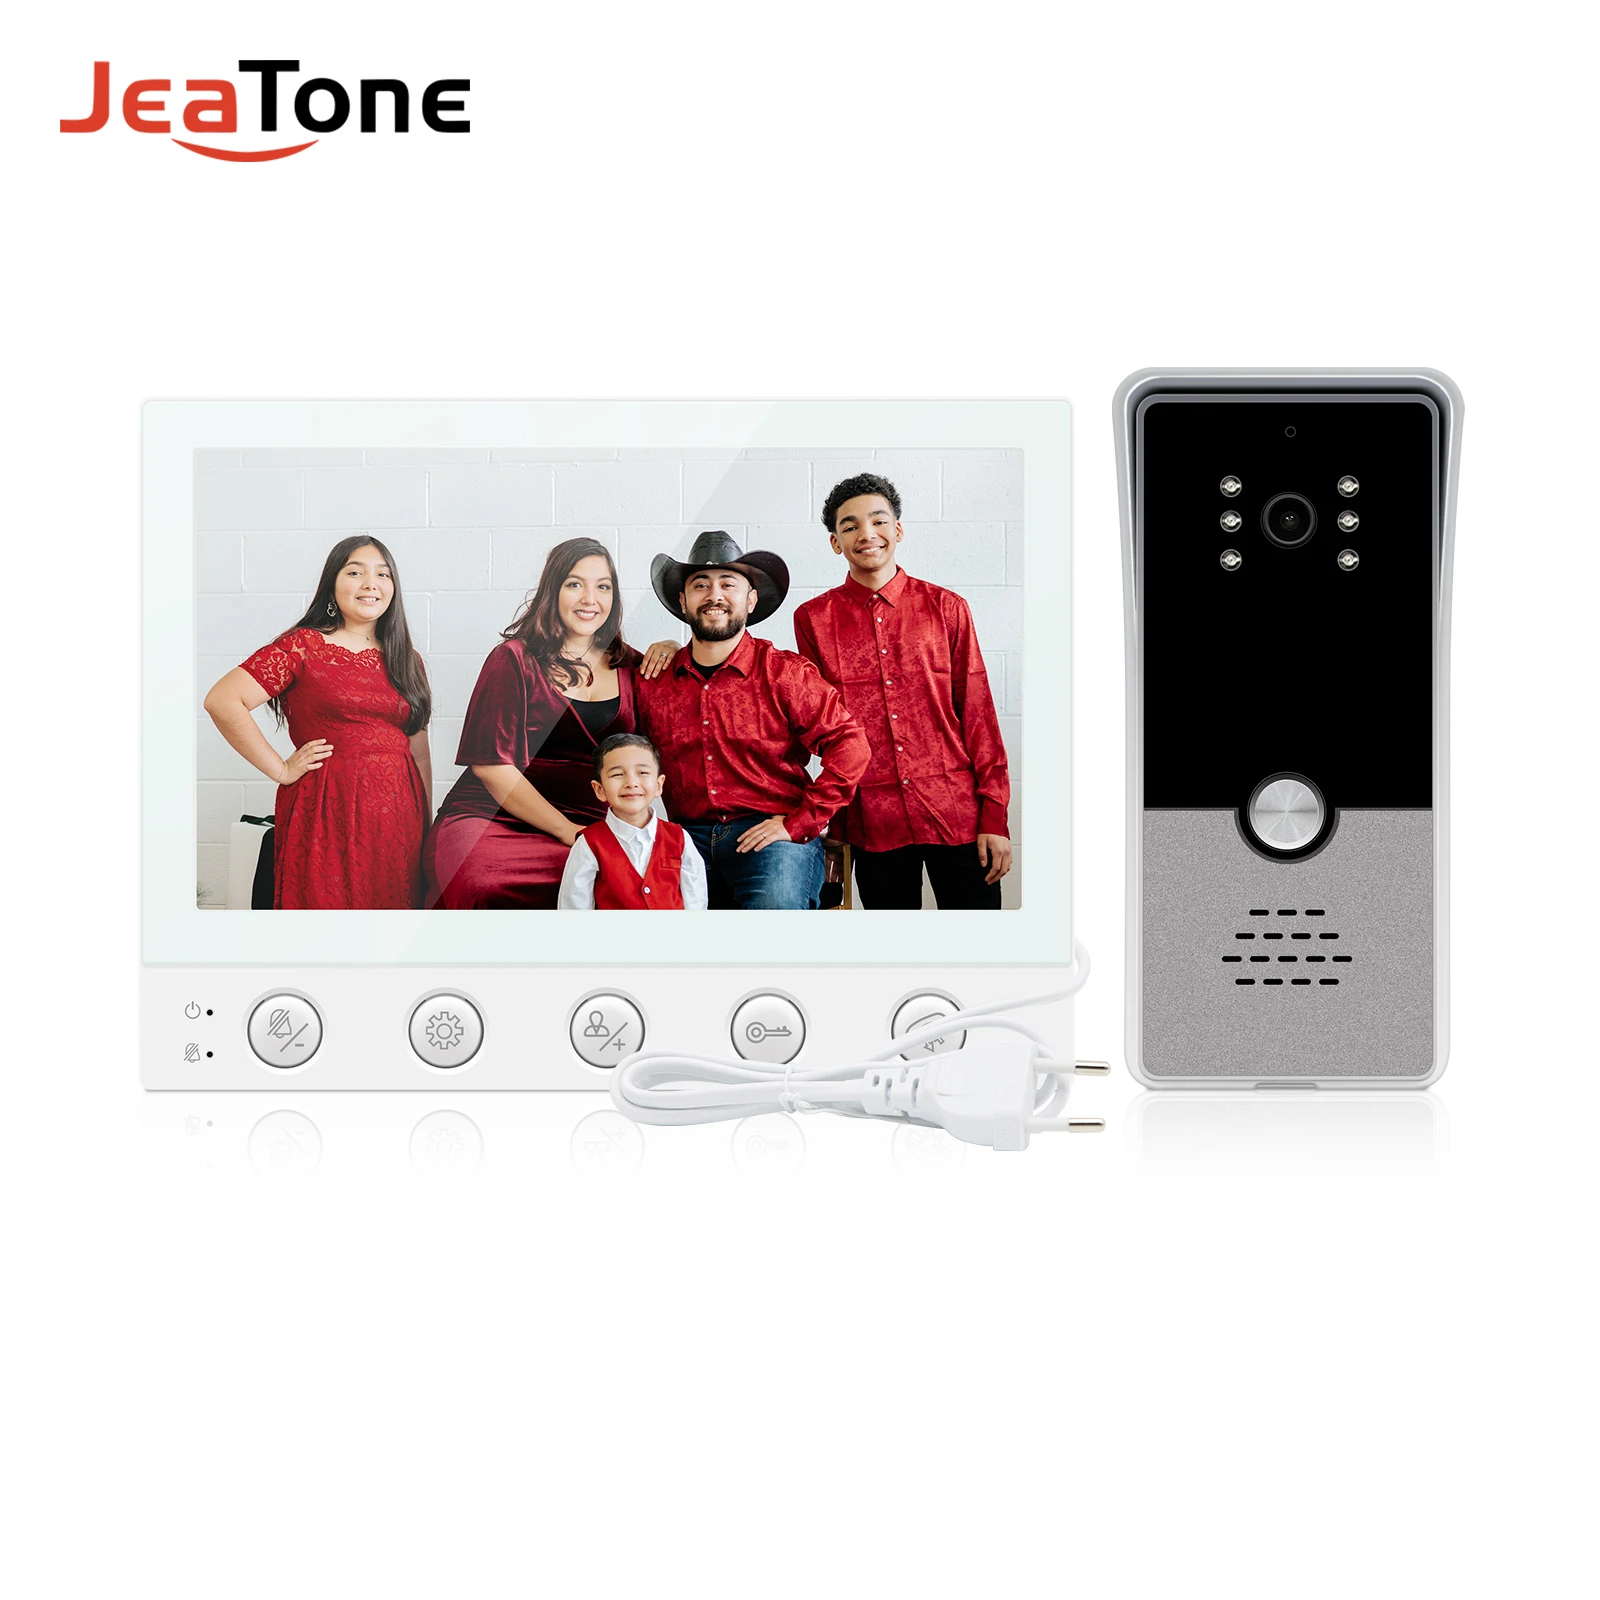 

Jeatone Home Light Video Intercom 7 Inch Screen Doorbell with CVBS 1200TVL Camera Entity keys,Dual Way Talk and Night Vision